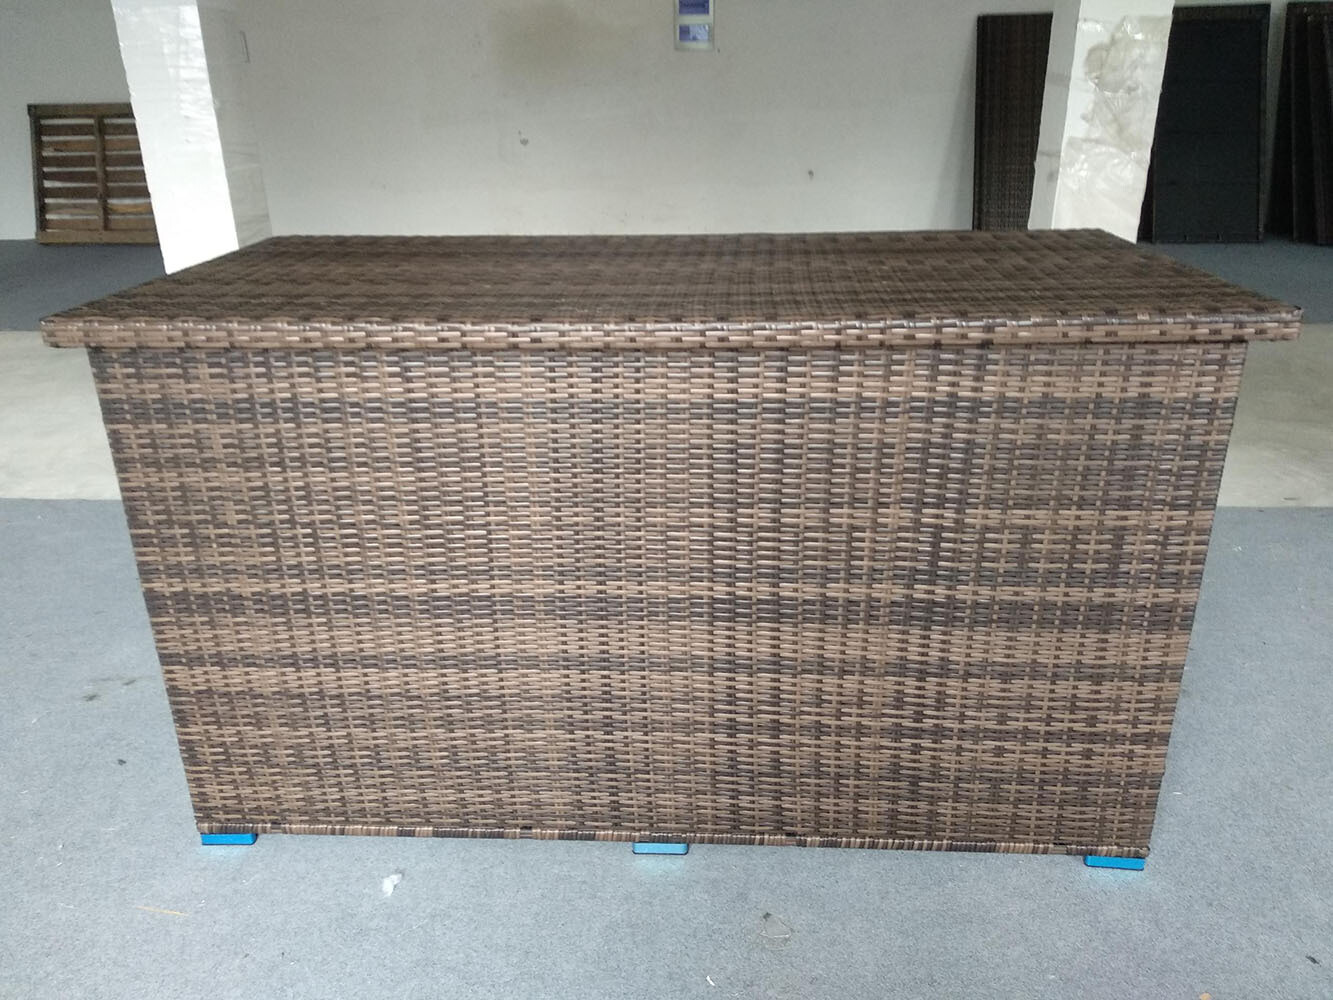 Patio Deck Box Outdoor Storage Decorative Wicker Garden Furniture Rattan Container Cabinet